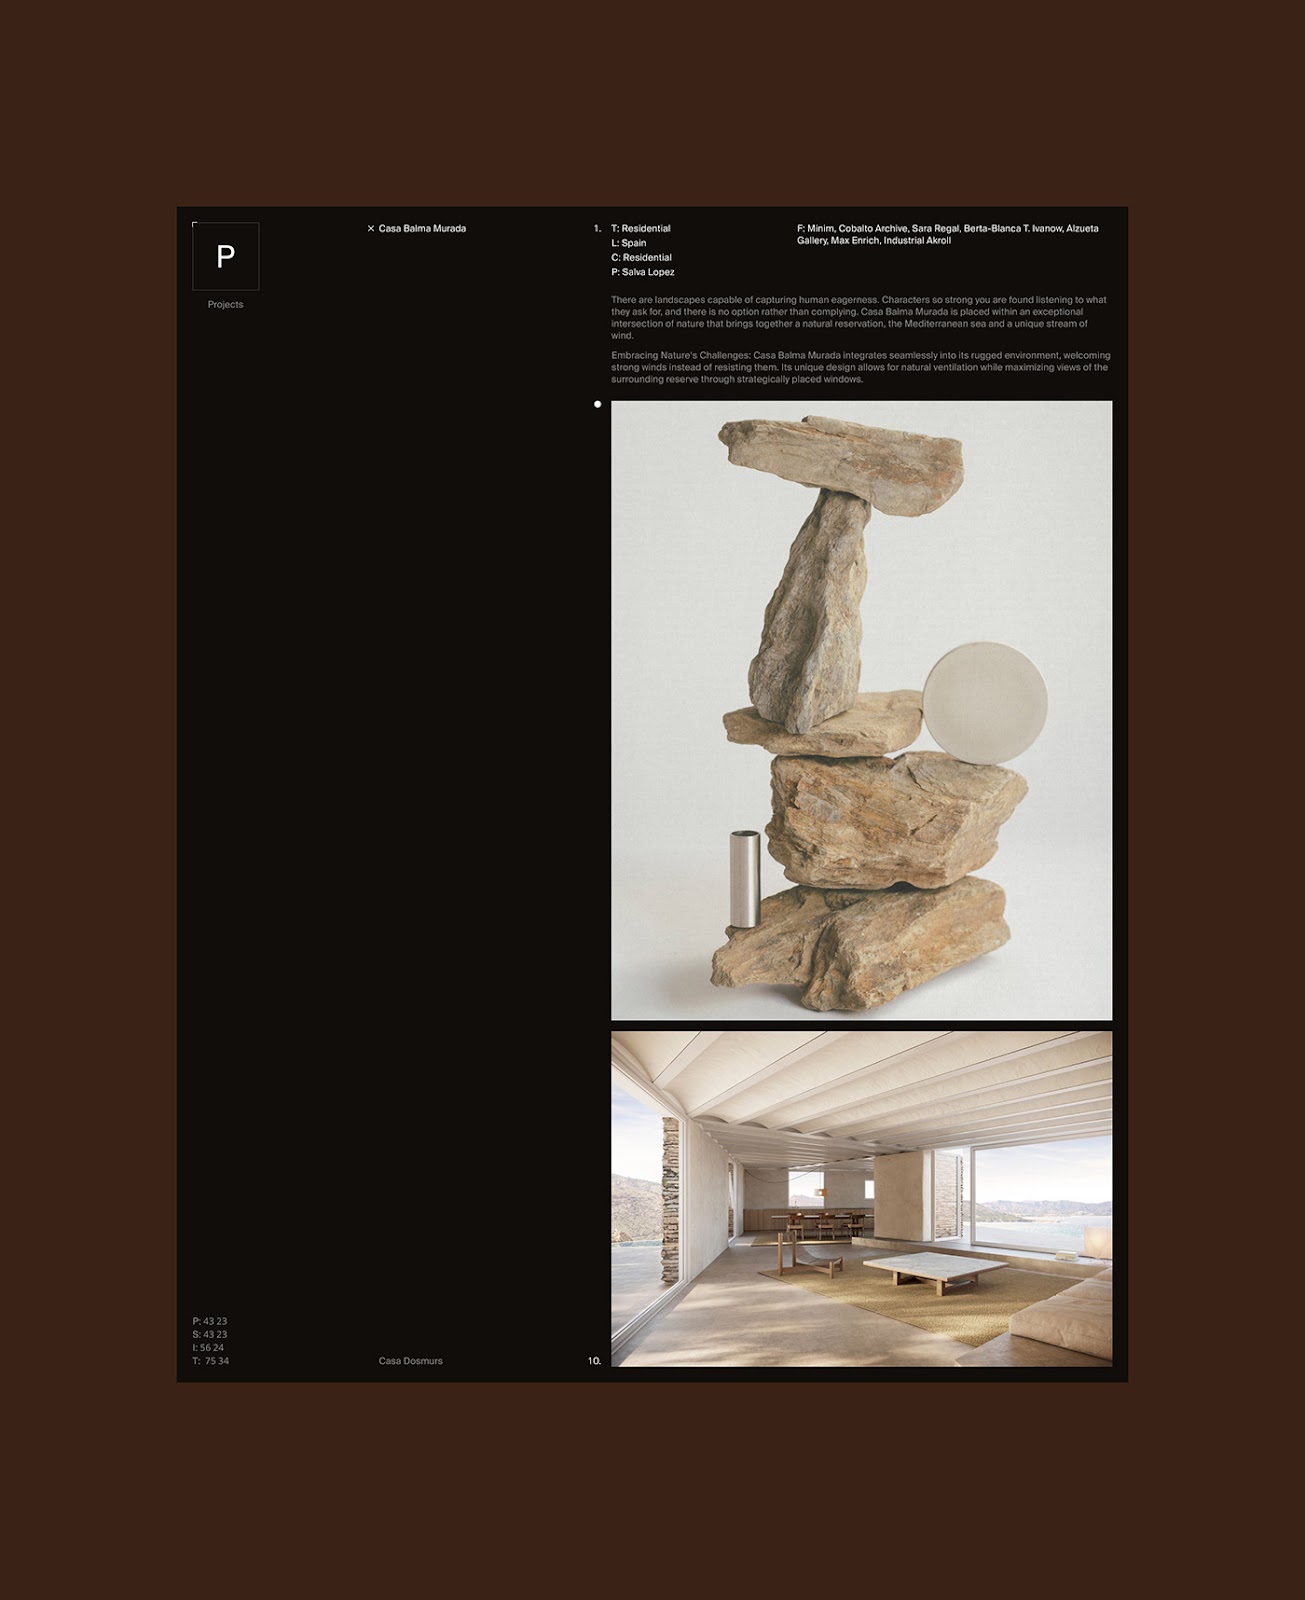 Figma Web Design  architecture Photography  UI/UX furniture Website studio motion typography  